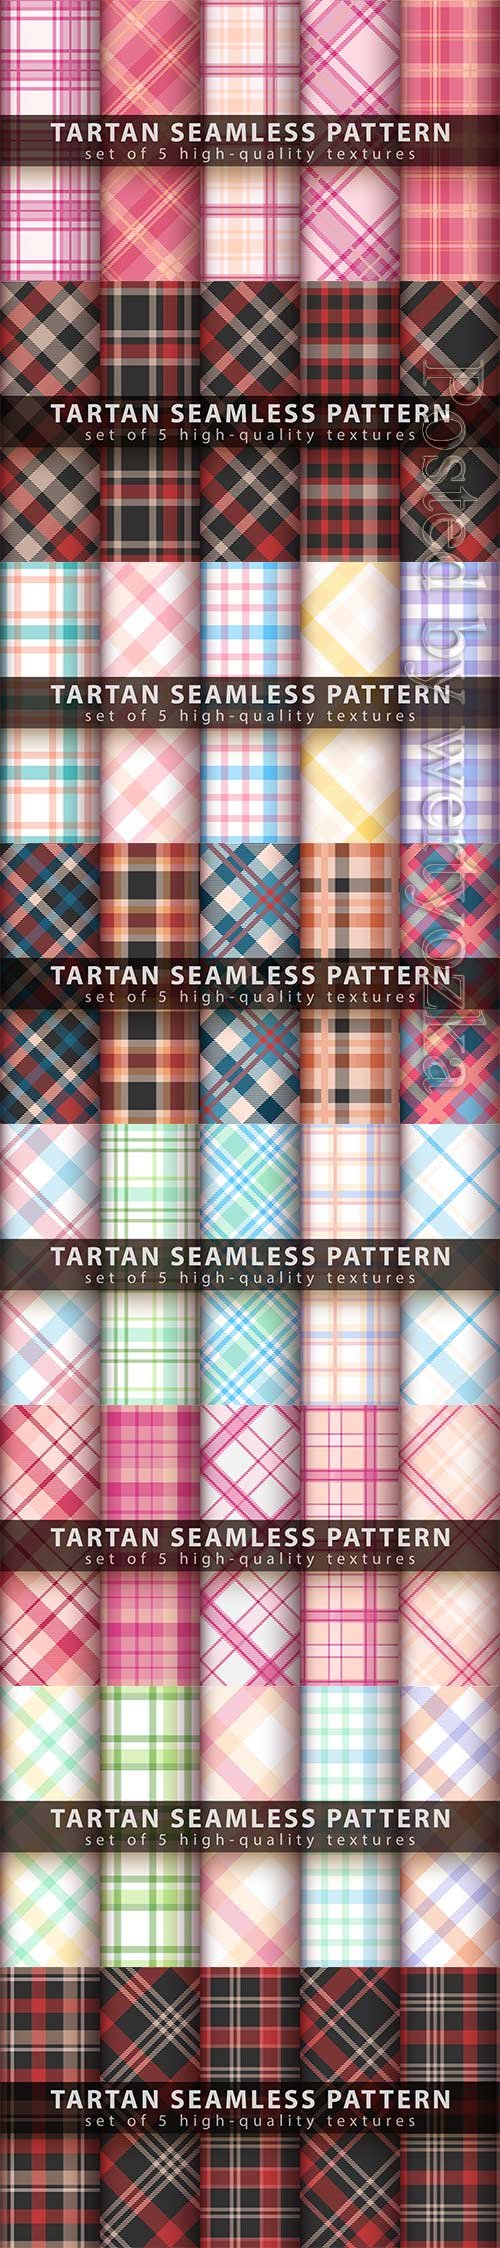 Set of classic tartan seamless pattern